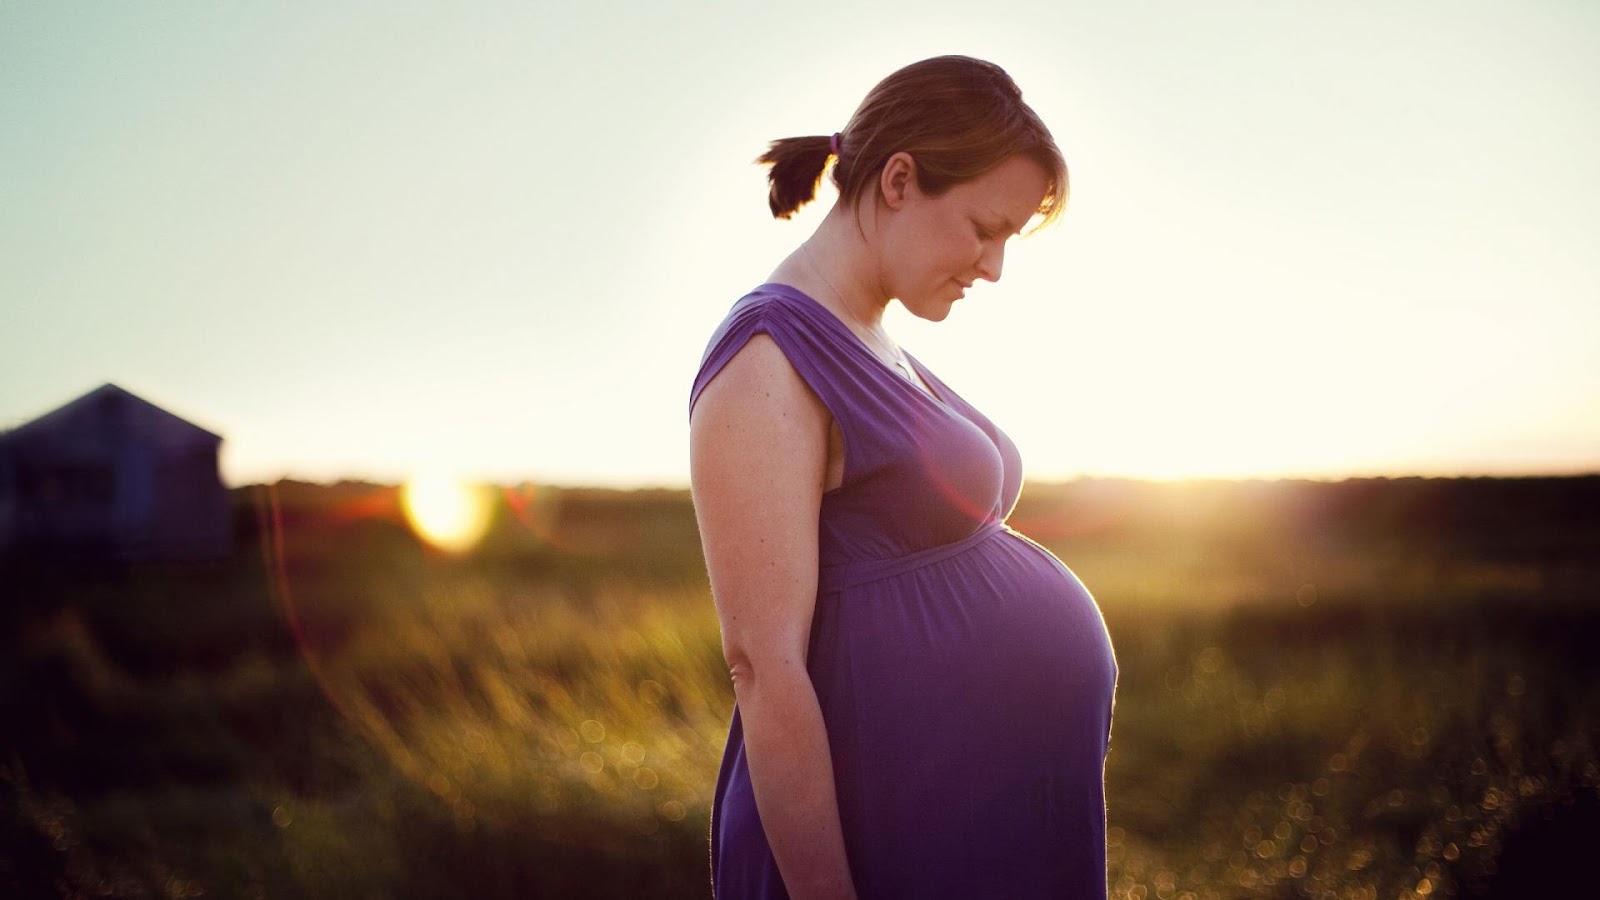 Pictures Of Pregnant Women Full Kumpulan Gambar Lengkap